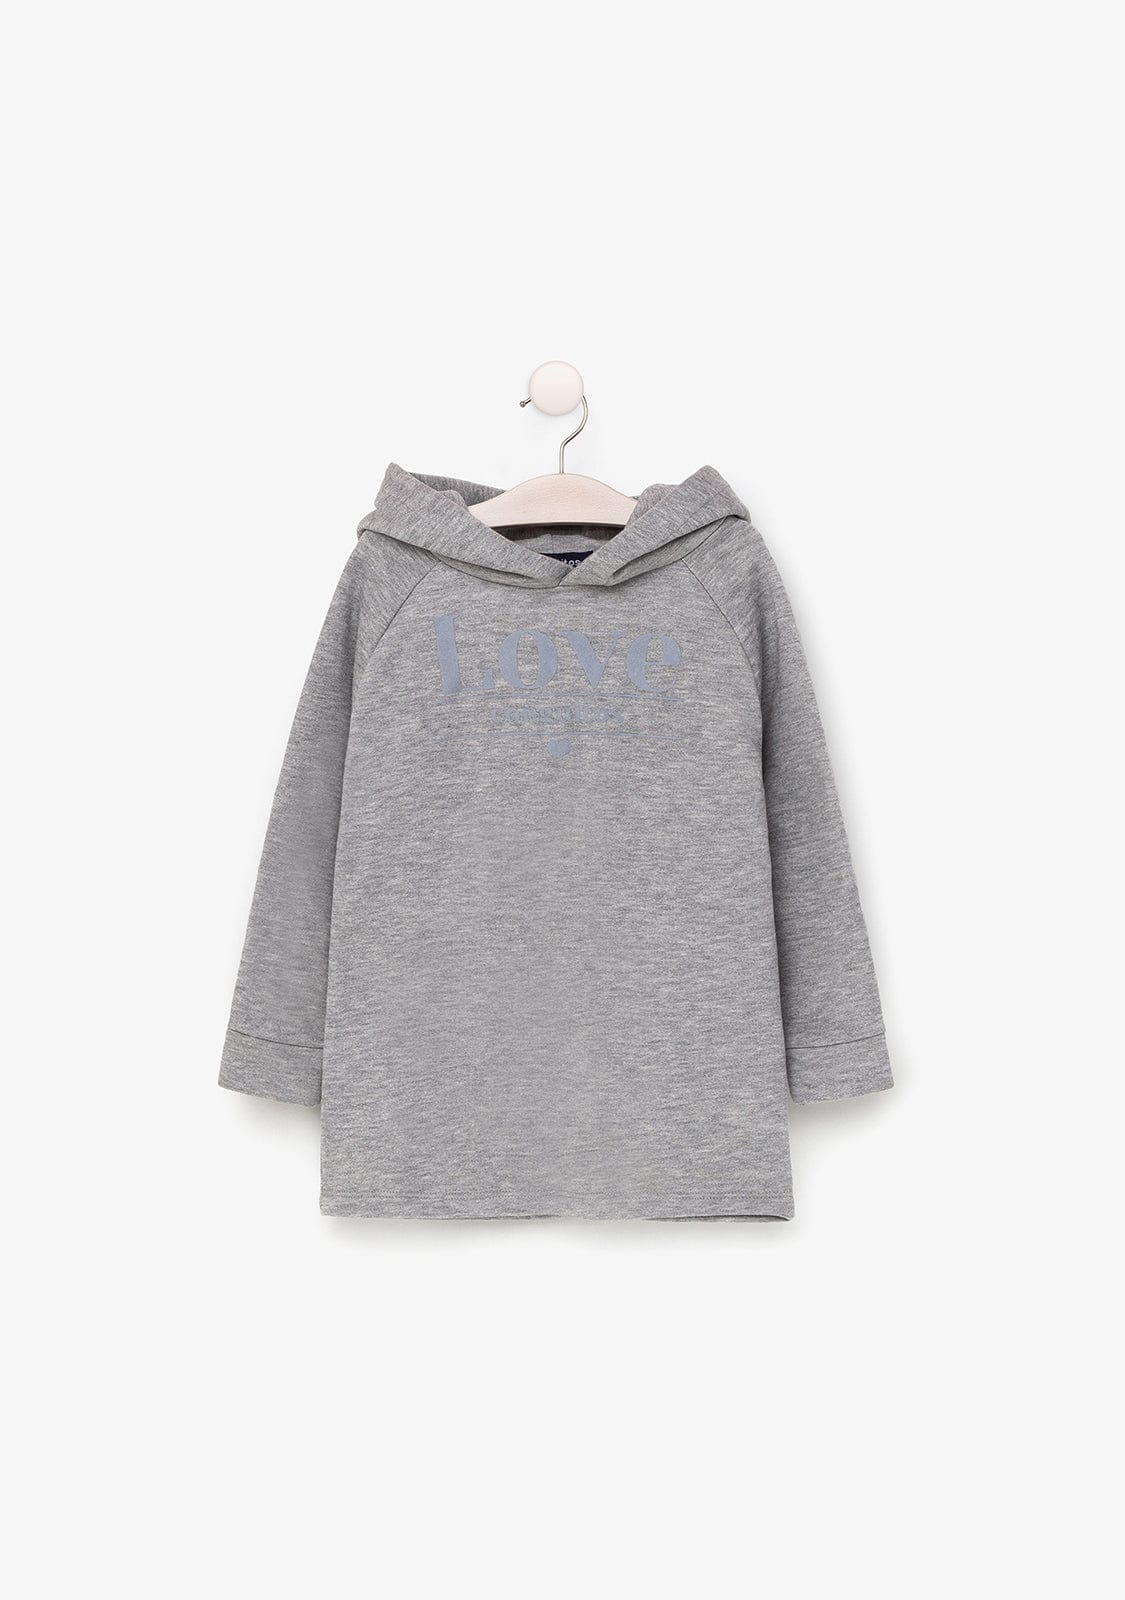 CONGUITOS TEXTIL Clothing Girl's Grey Reflectant Sweatshirt Dress